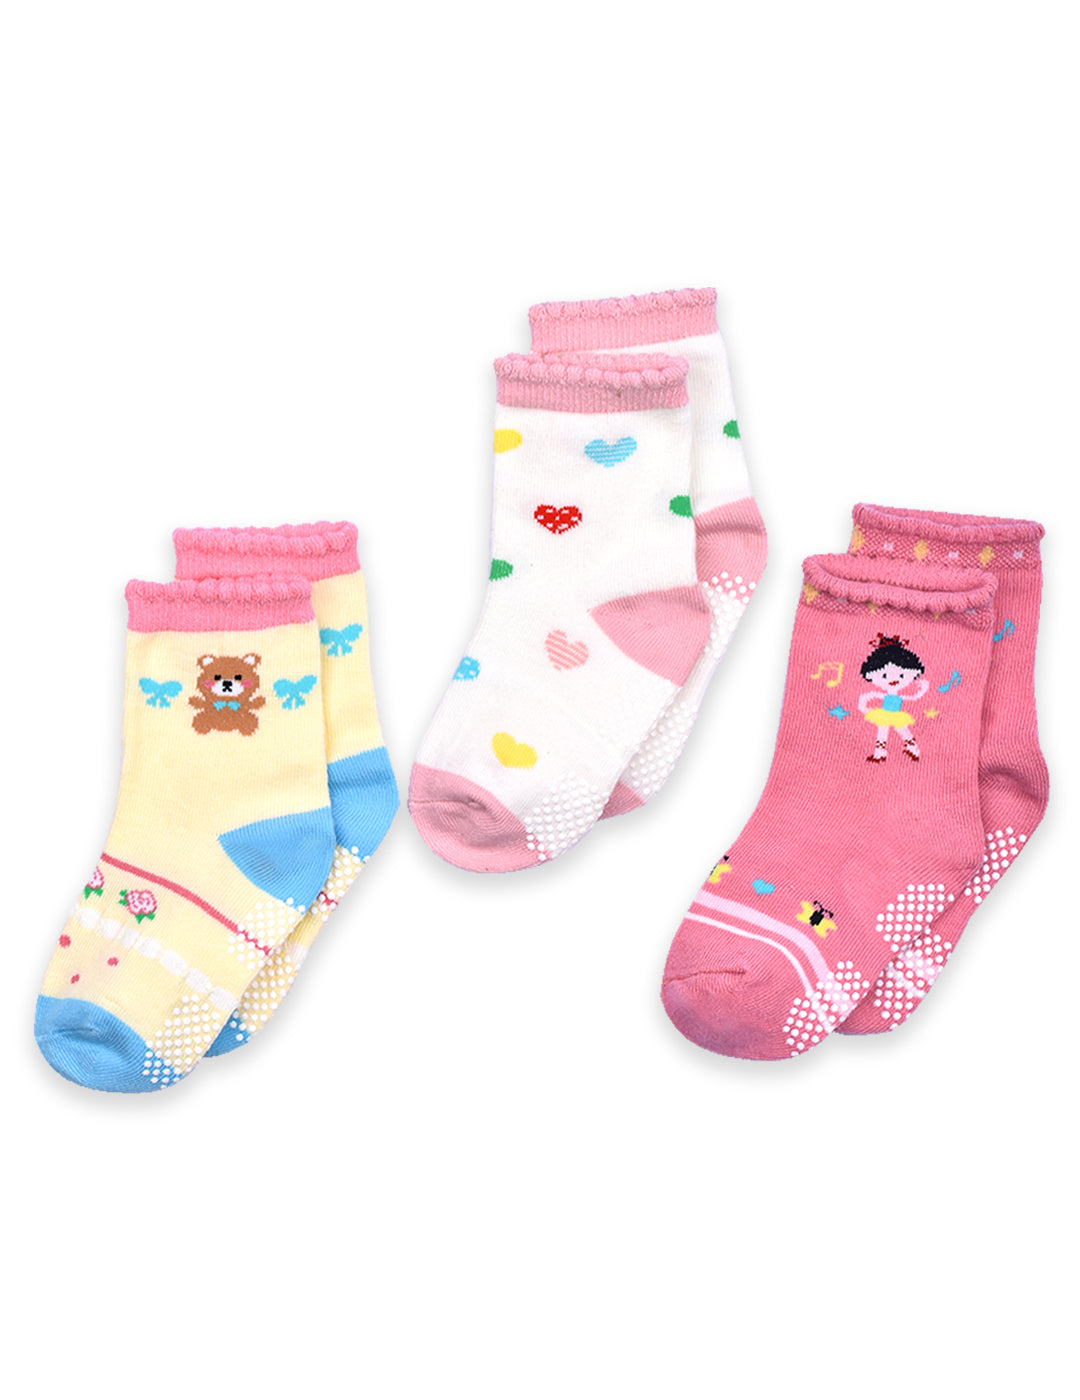 Baby Organic Cotton  Girls Antiskid Socks, Patterned  - Pack of 3